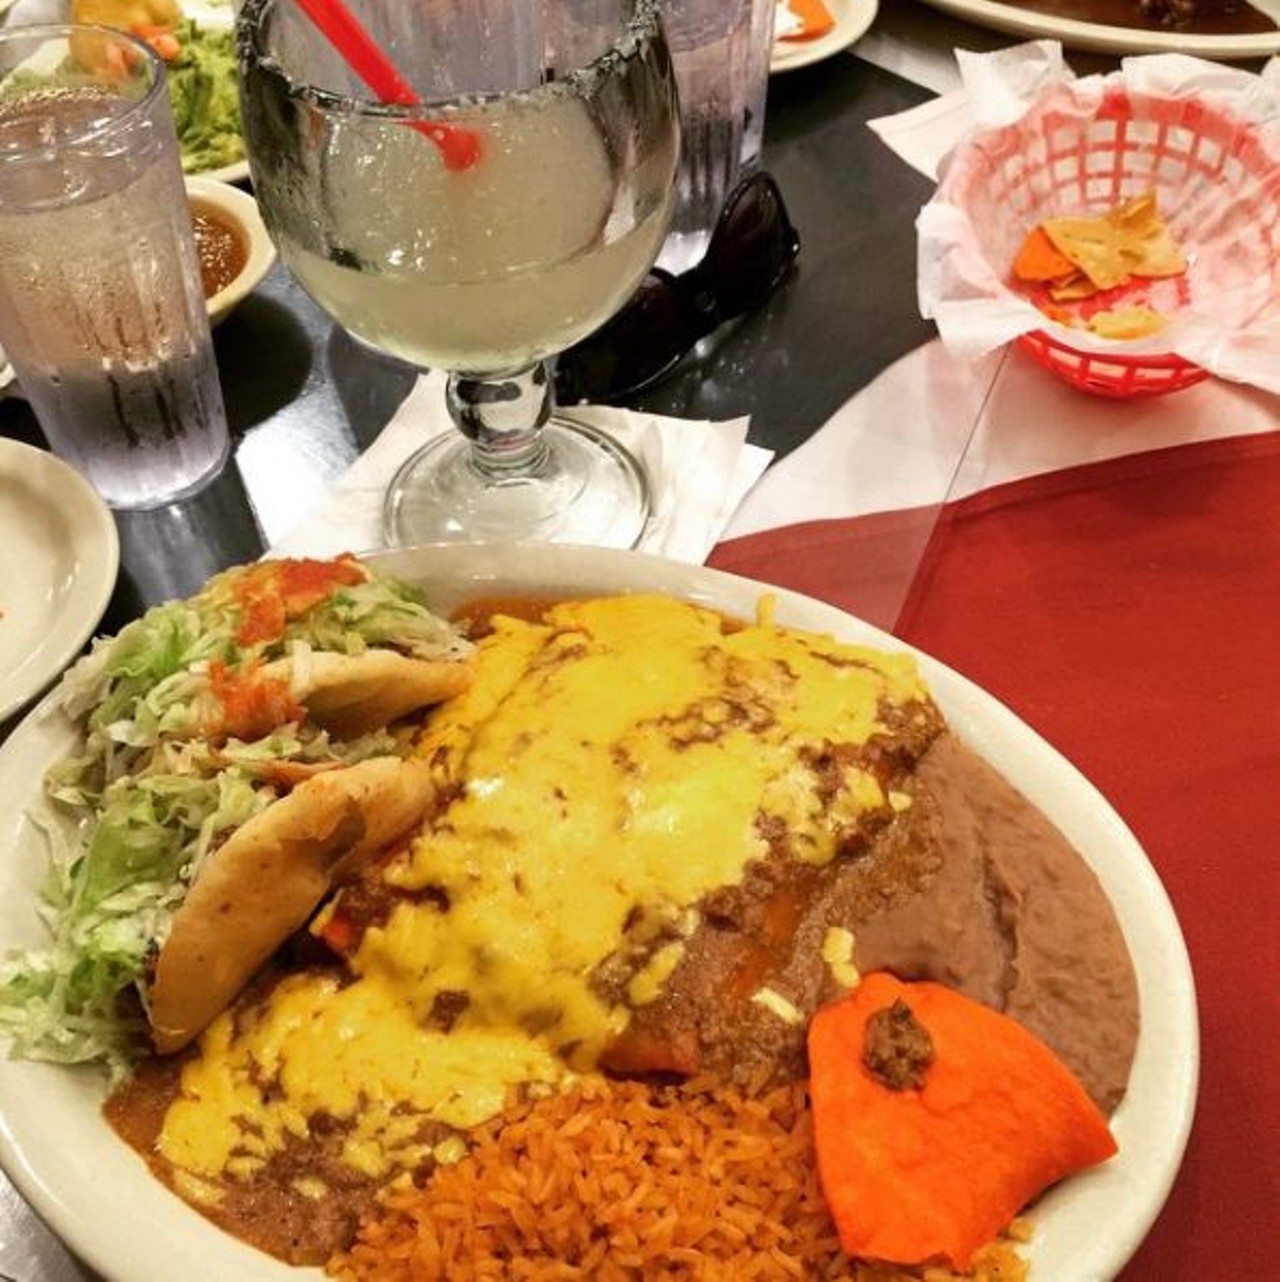 Jacala Mexican Restaurant
606 West Ave., (210) 732-5222
Puffy tacos, enchiladas, chile rellenos, margartias &#151; Jacala has got it all. 
Photo via Instagram, socialiteinsa